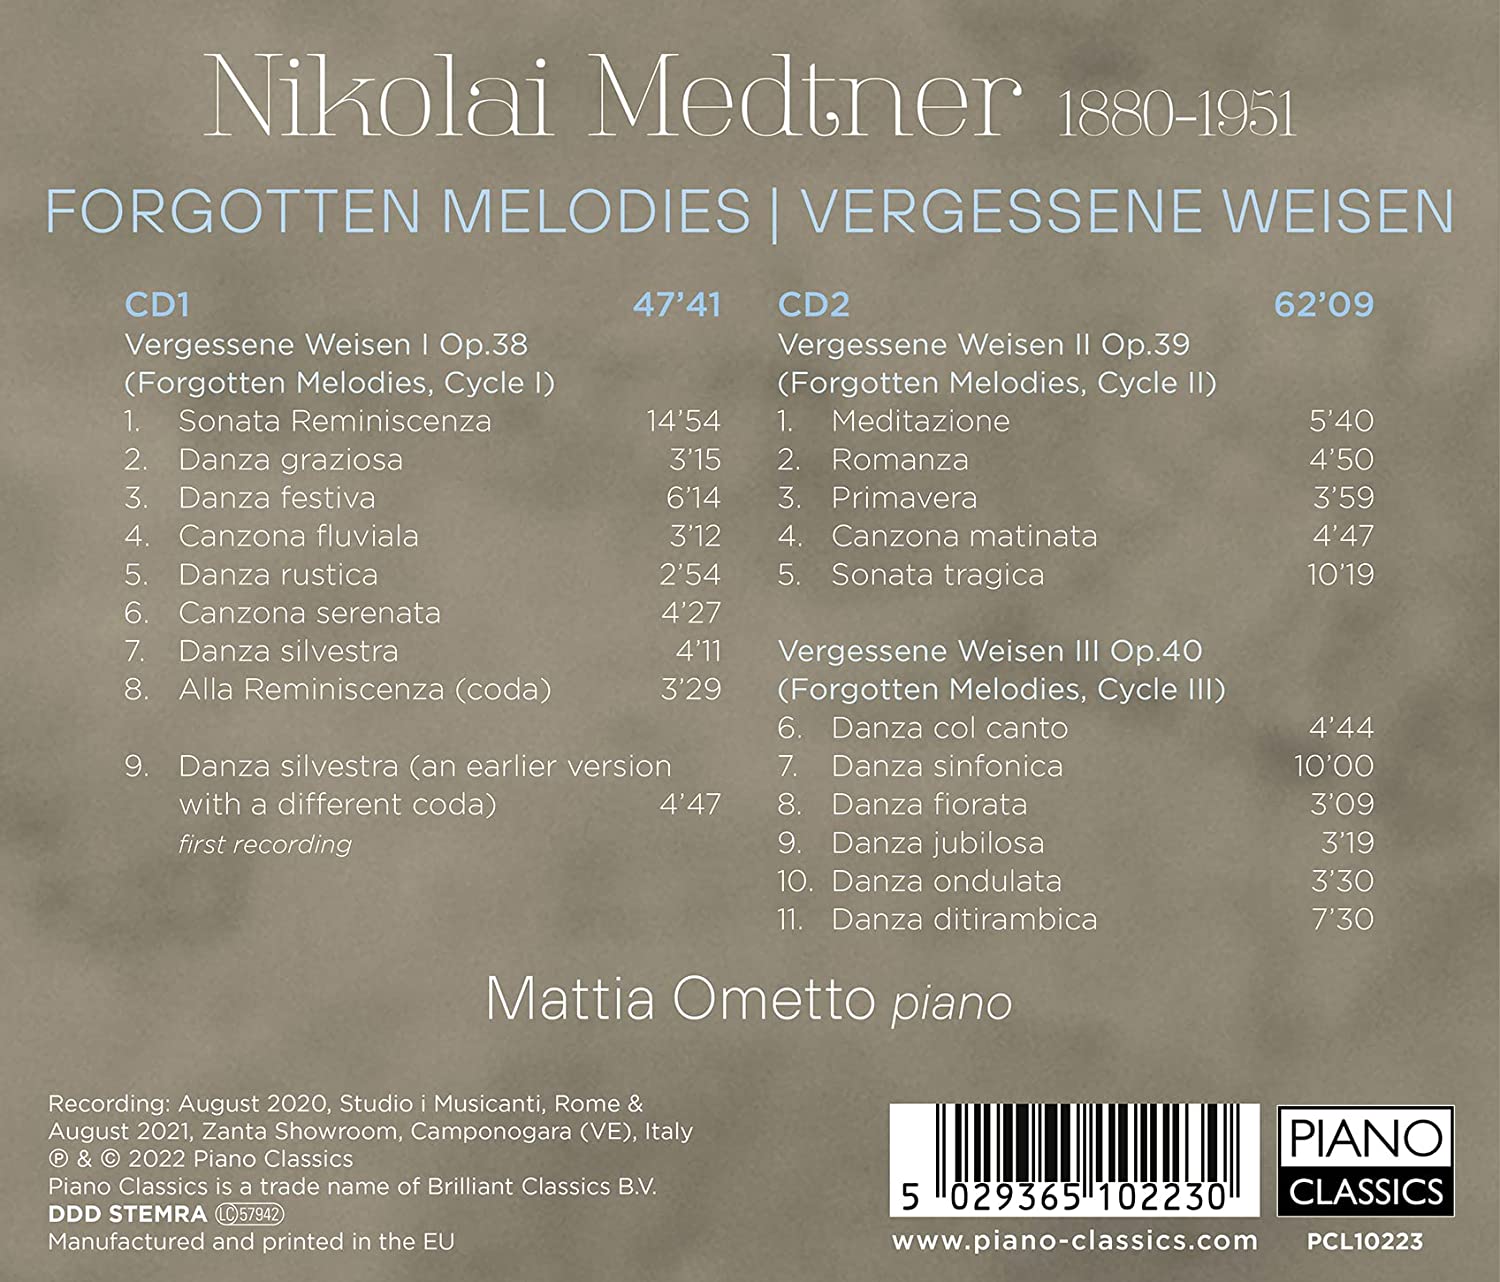 Mattia Ometto 메트너: 망각된 멜로디 (Medtner: Forgotten Melodies)